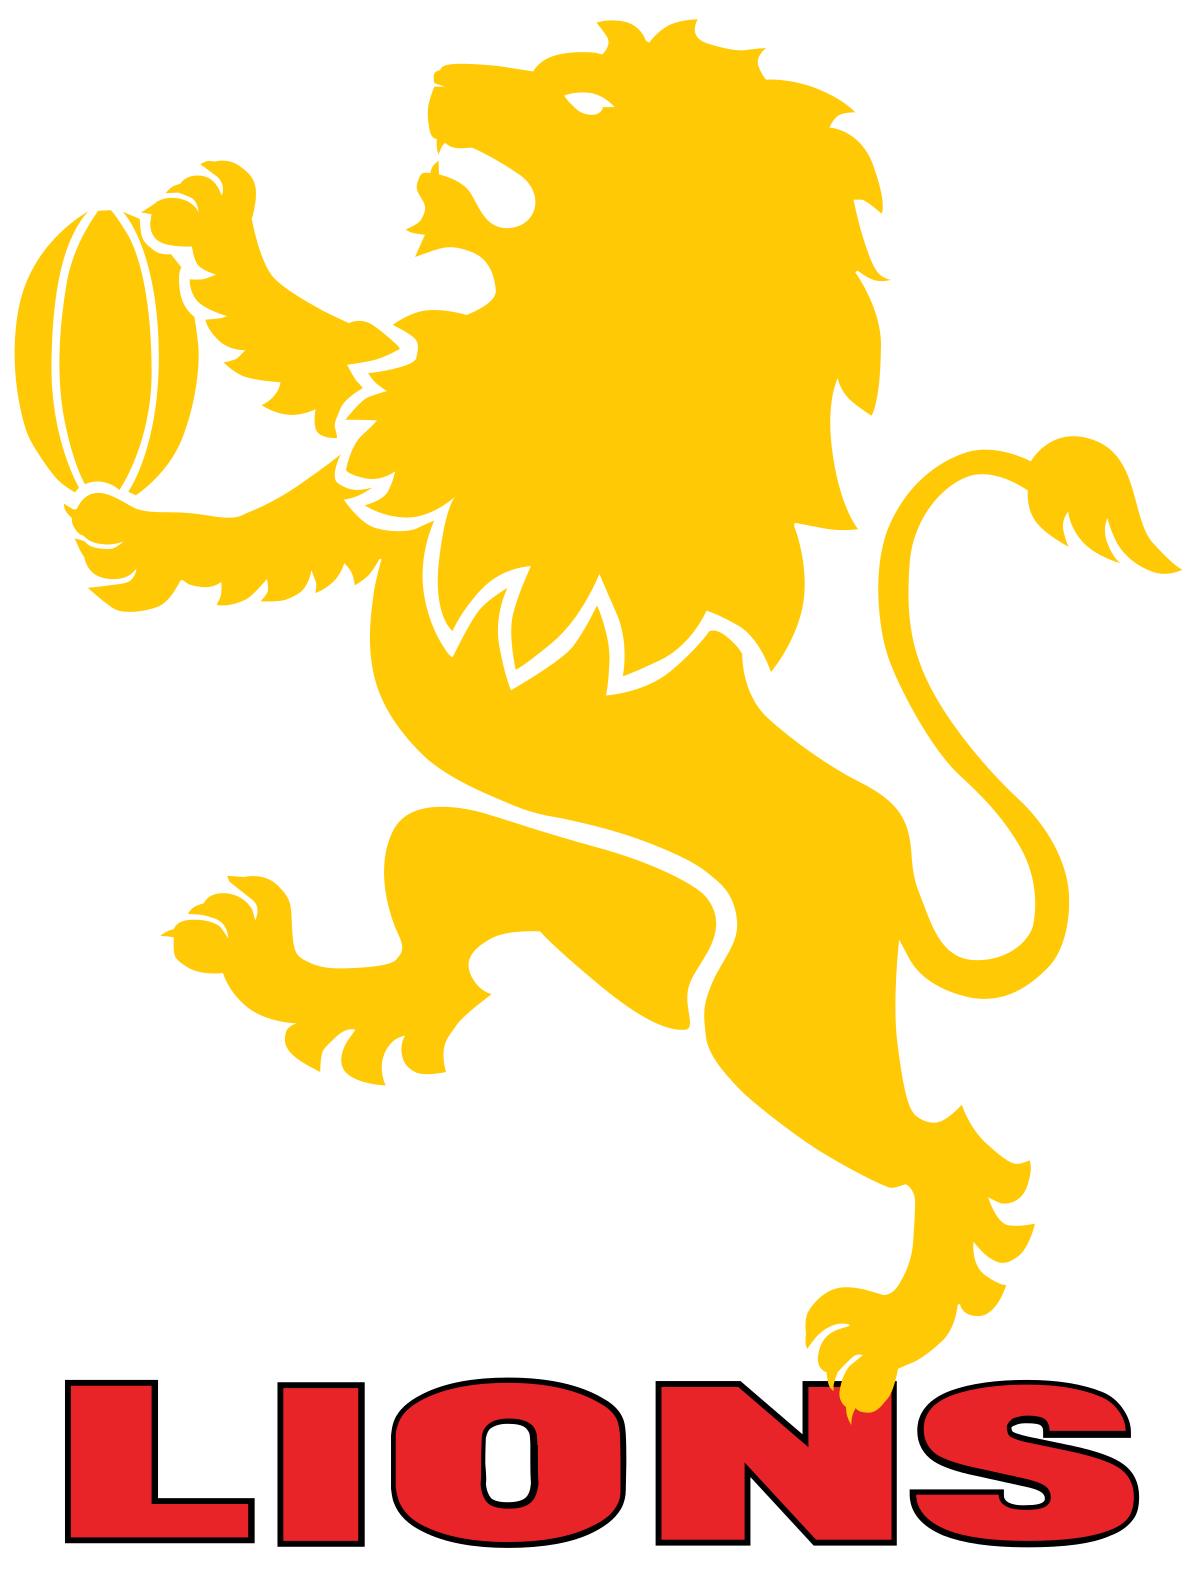 Howard Lions Logo - Golden Lions